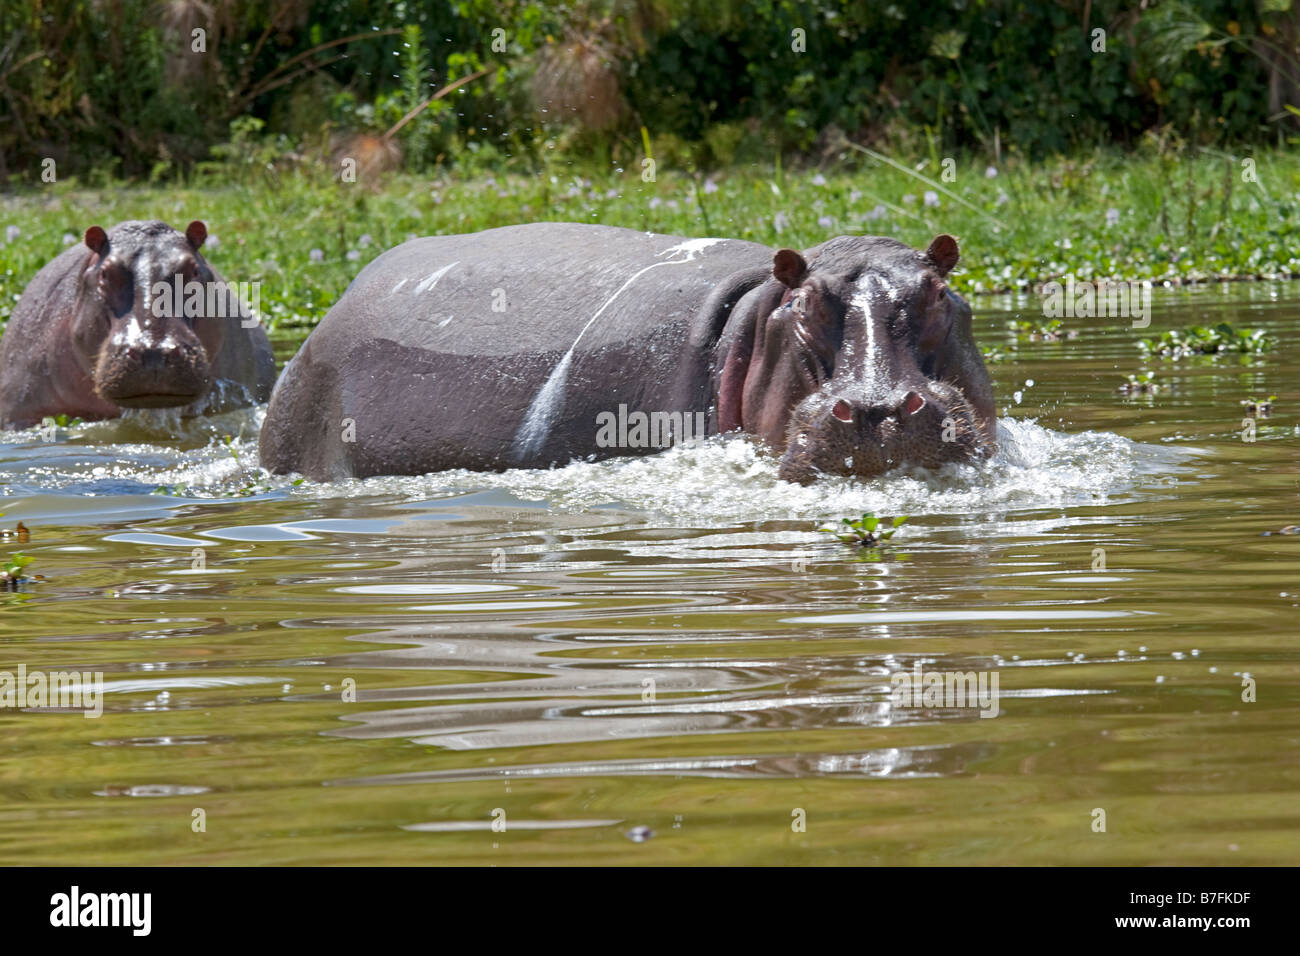 Angry Hippopotamus Lake Naivasha Kenya Stock Photo